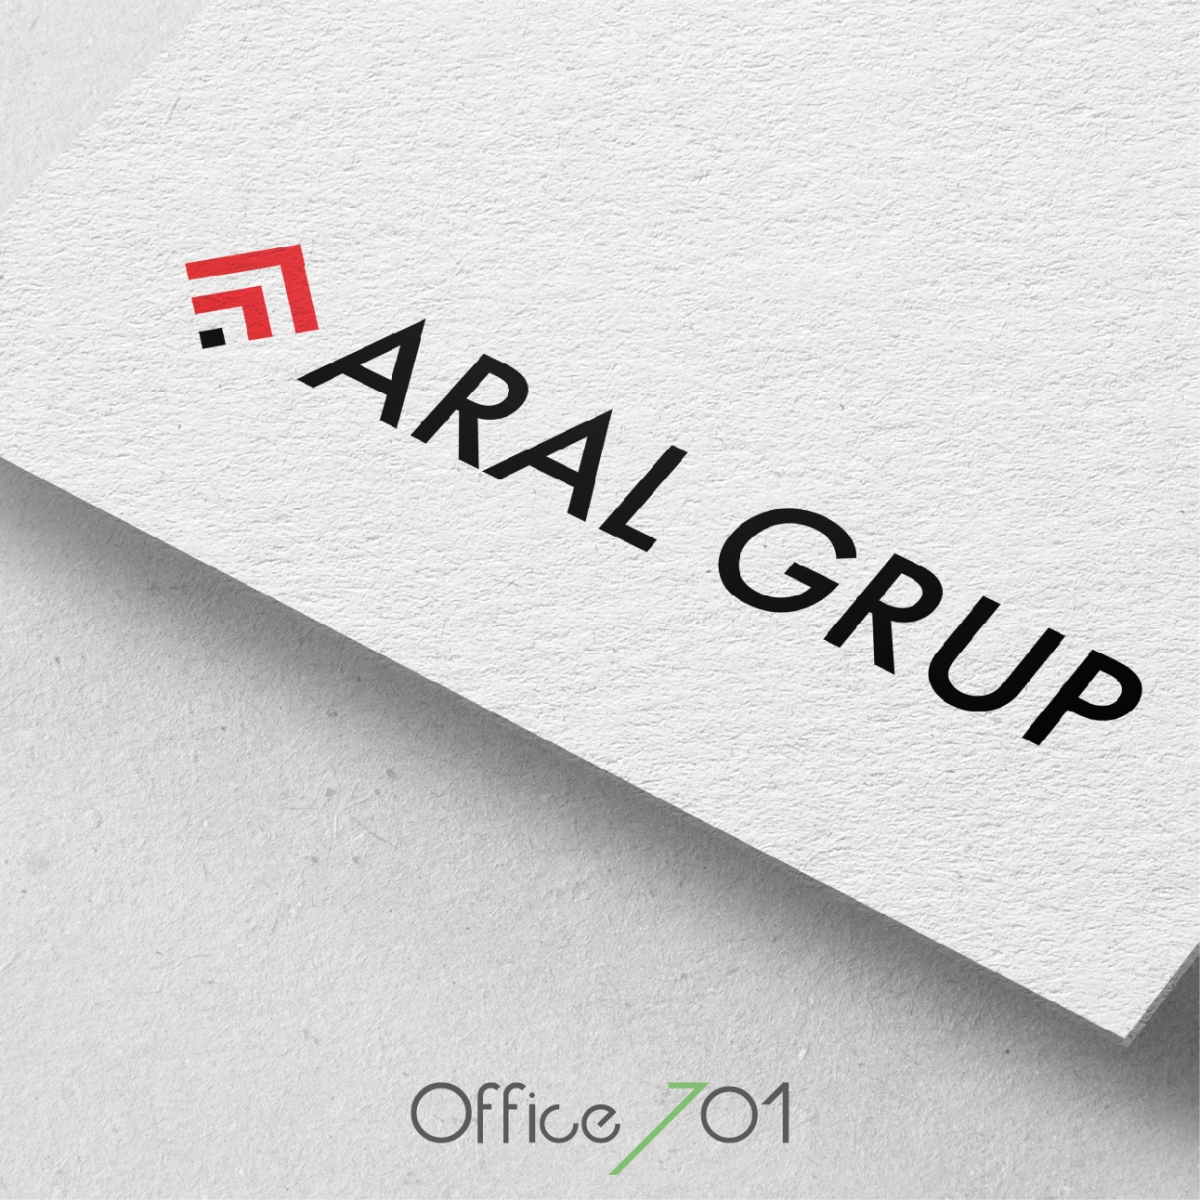 Office701 | Aral Grup | Logo Design